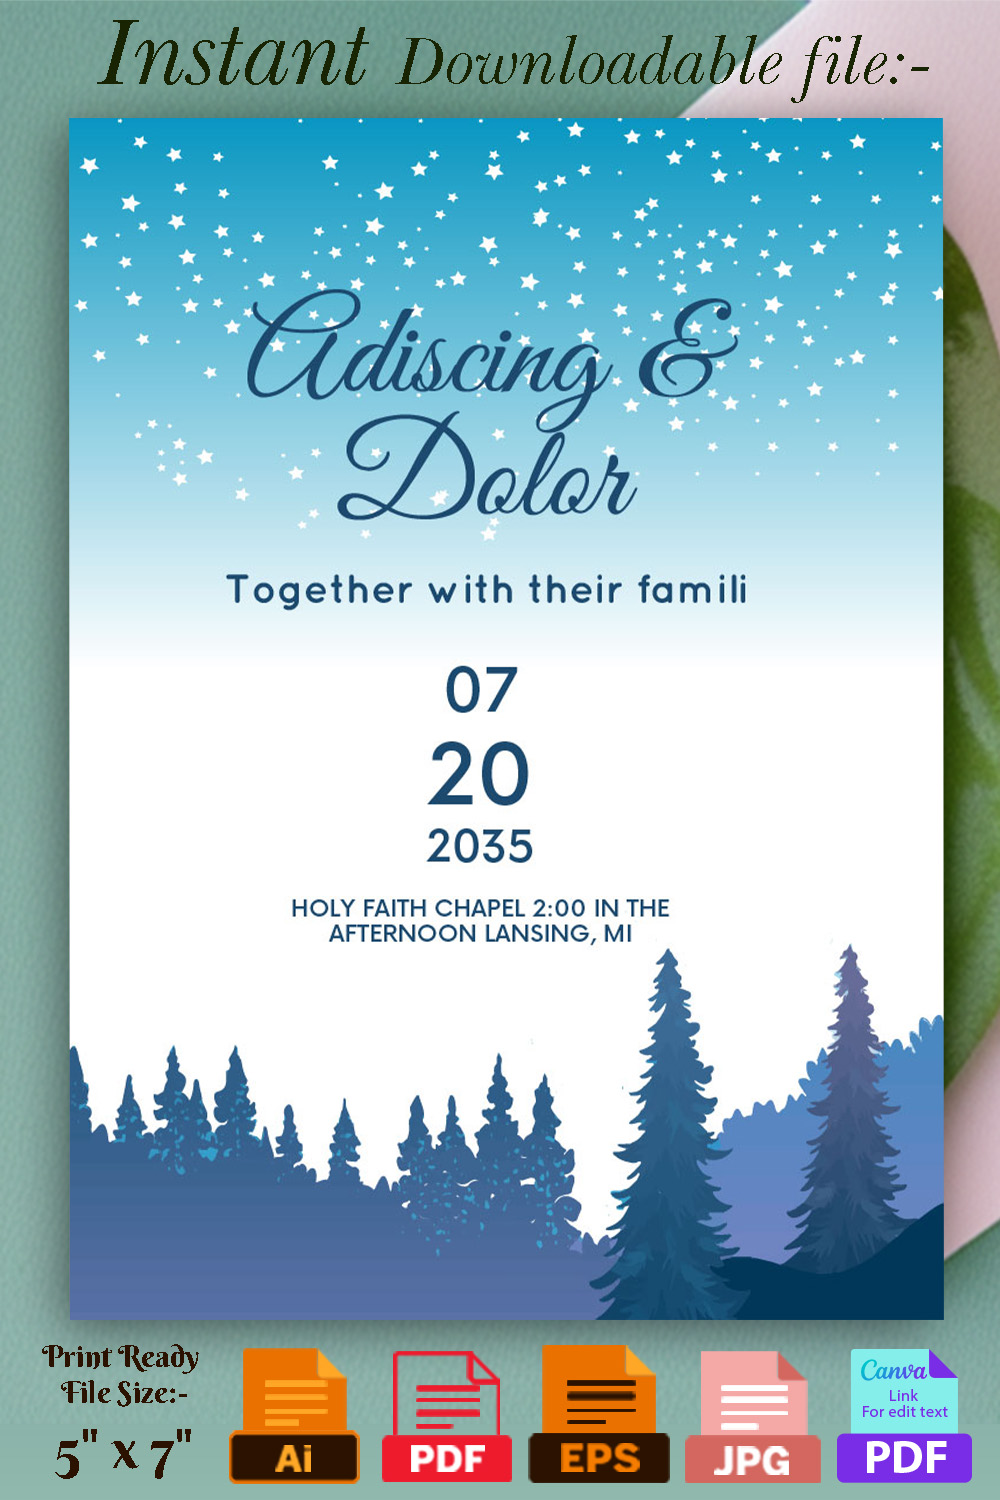 Winter Wedding Card with Frozen Landscape Pinterest.